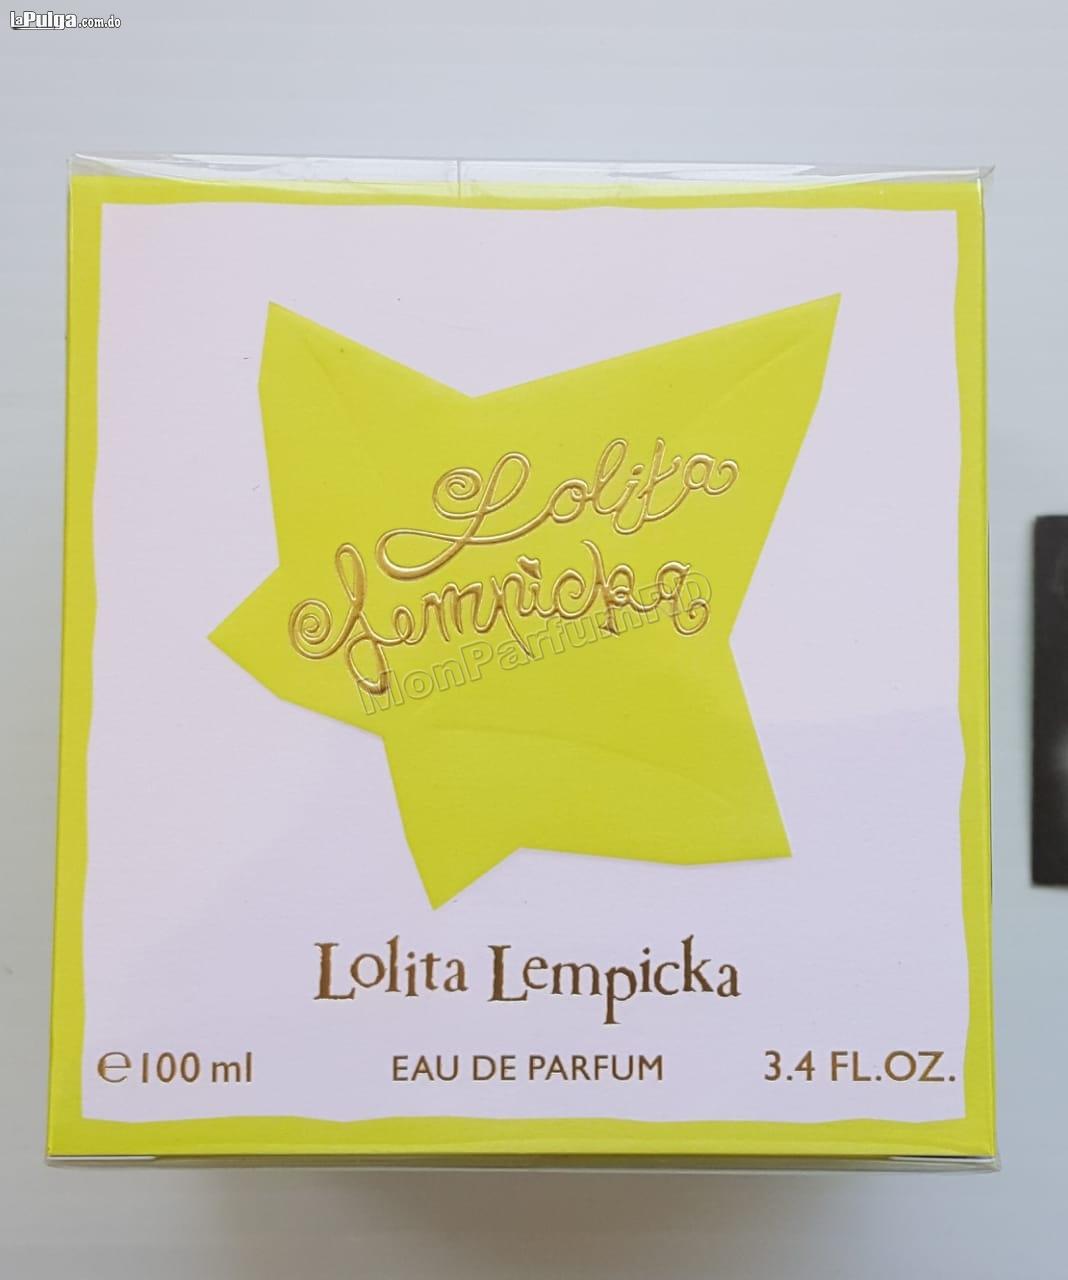 Perfume Lolita Lempicka damas. Original Foto 7114392-4.jpg